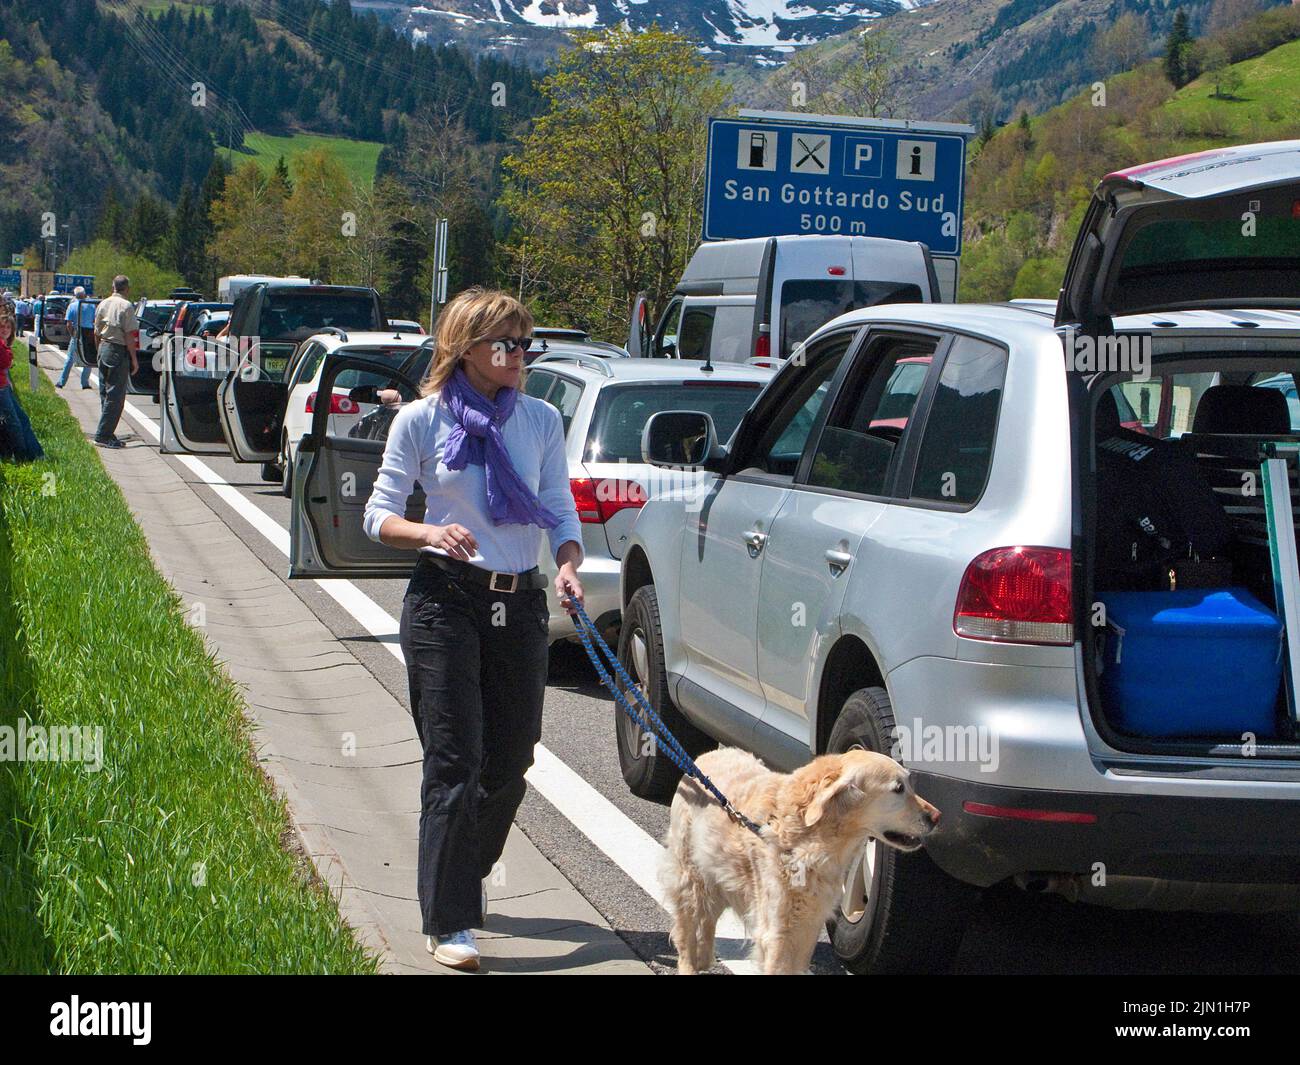 Línea de coches, atasco de tráfico en la autopista en el túnel de San Gotthard, Suiza, Europa Foto de stock